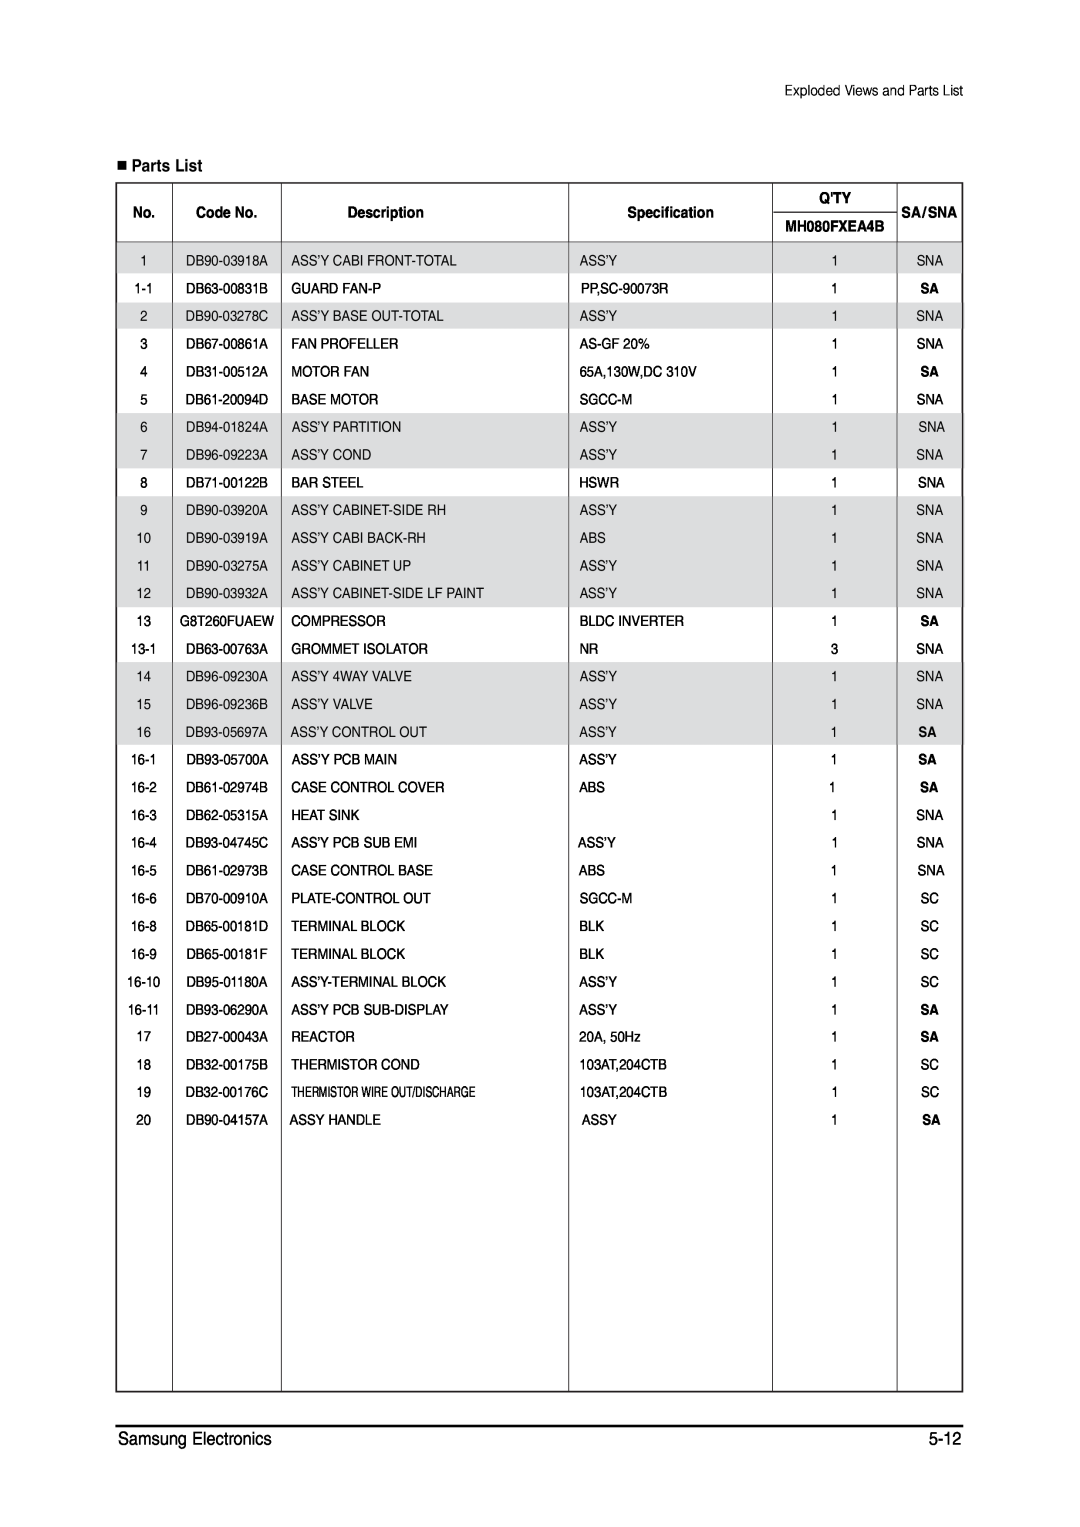 Samsung MH026FNCA service manual Parts List, Samsung Electronics, 5-12 